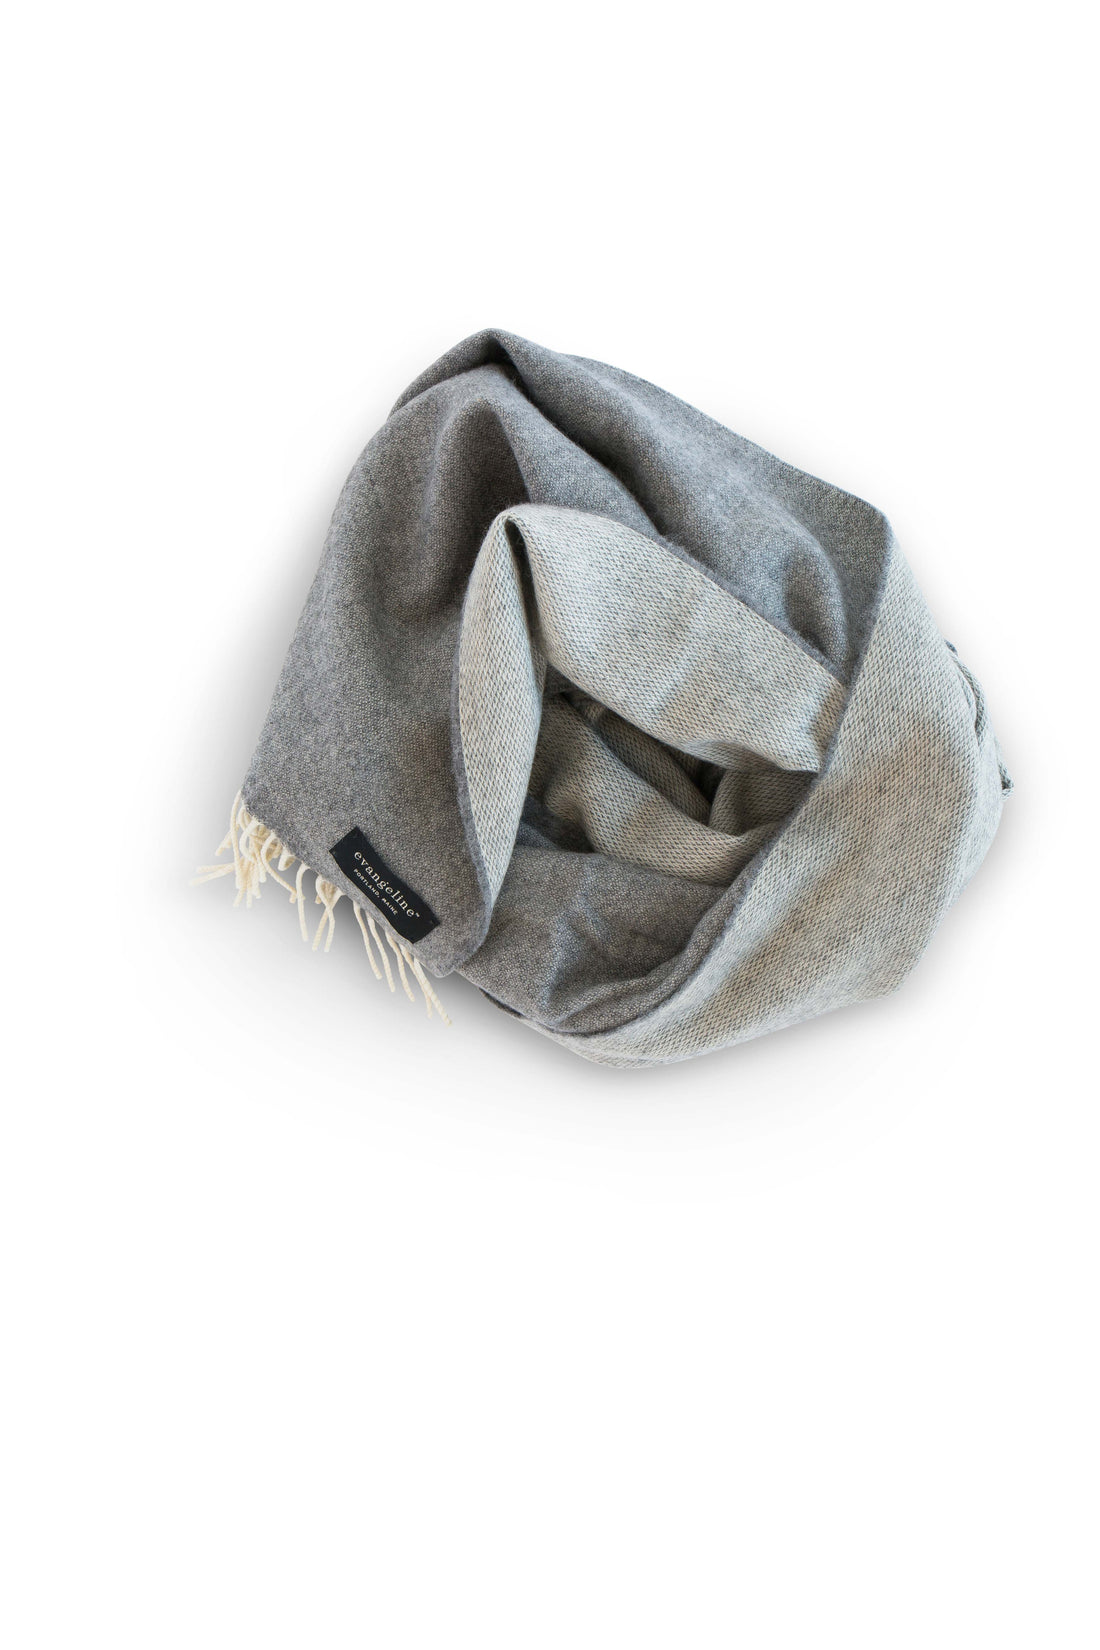 Merino Lambswool wearable wrap in graphite / grey and cream reversible. 